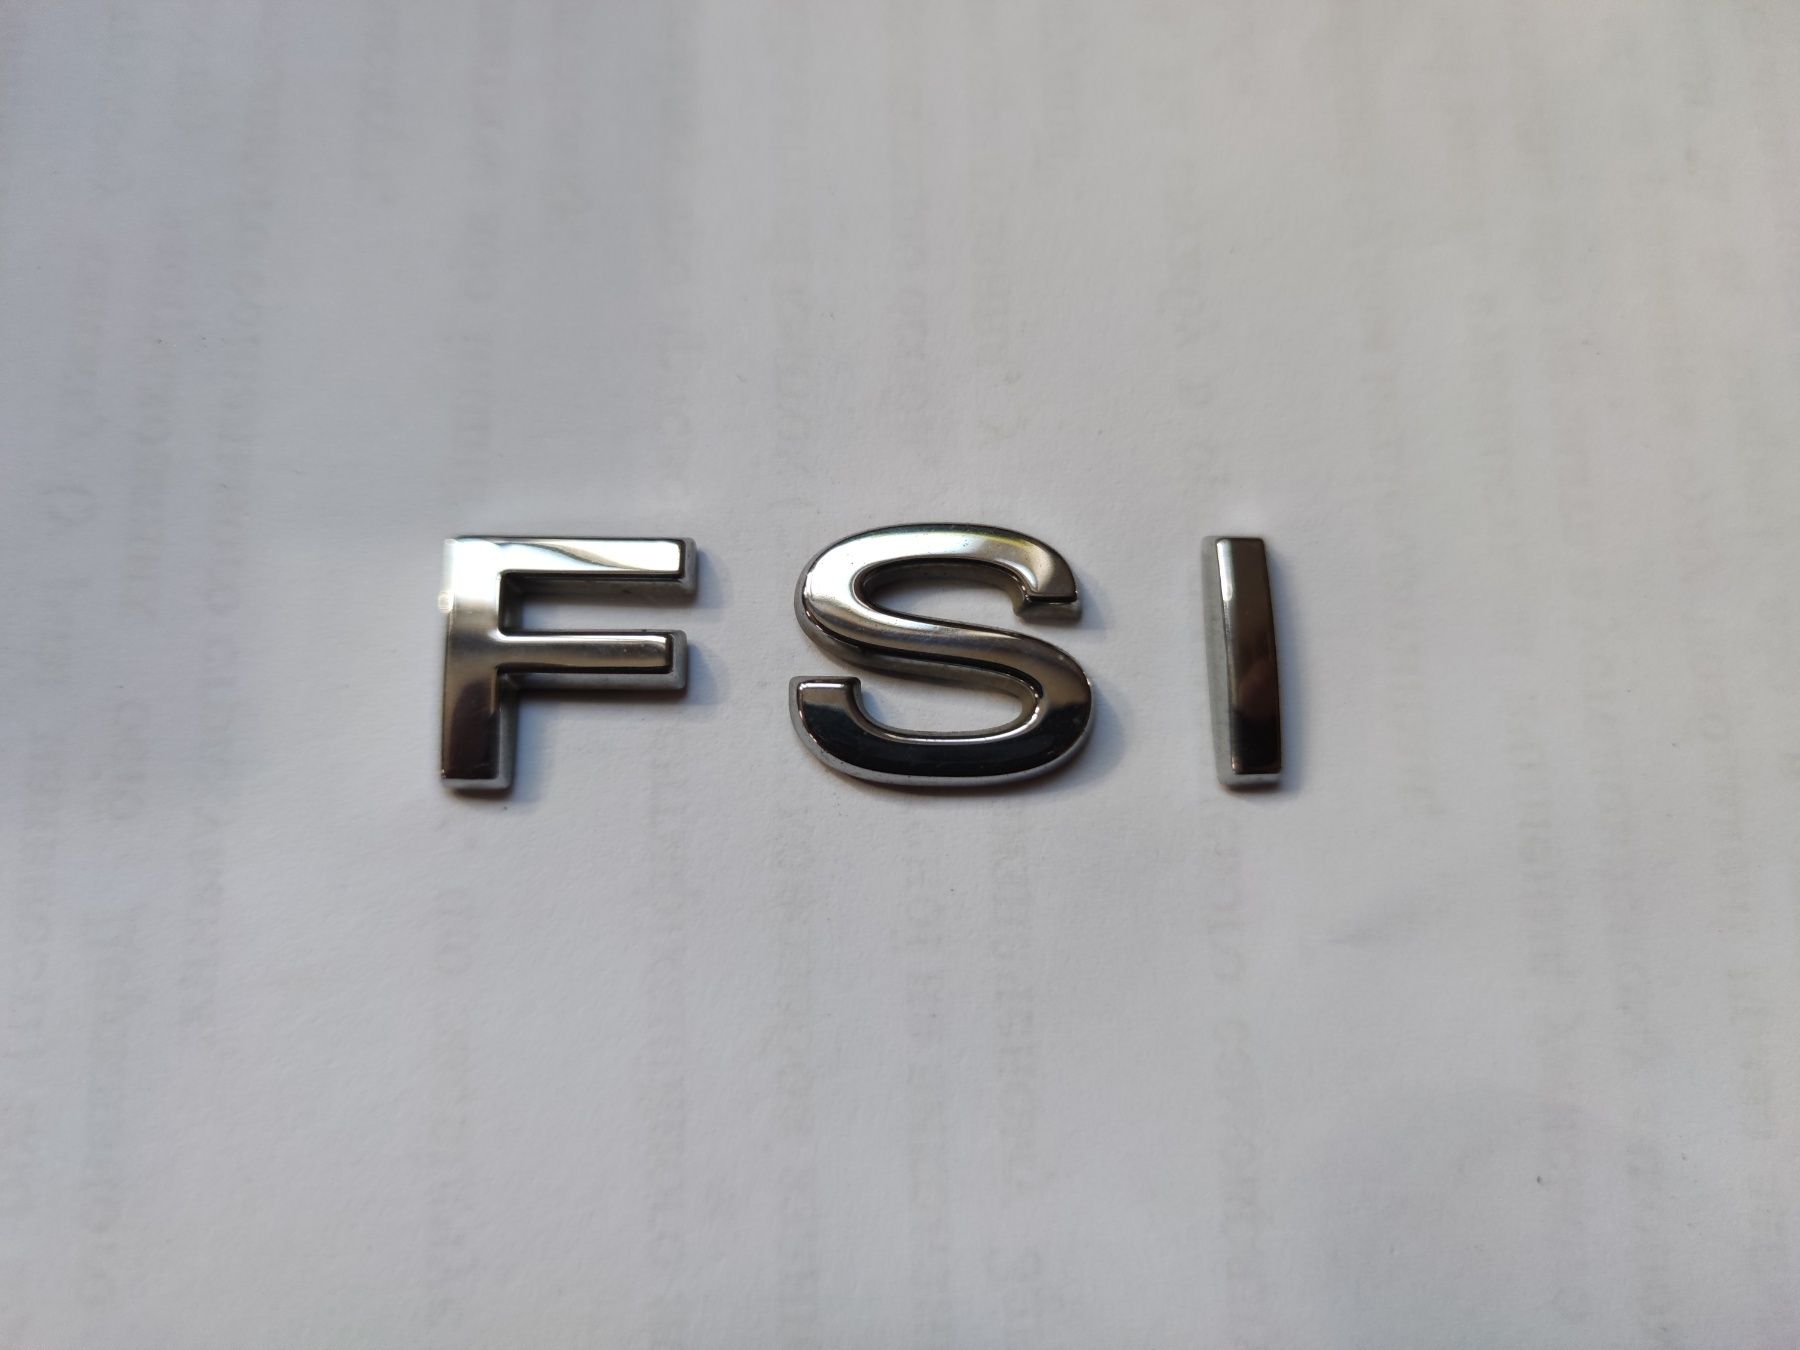 Шилдик Jetta шилдік Volkswagen Jetta fsi Буквы багажника